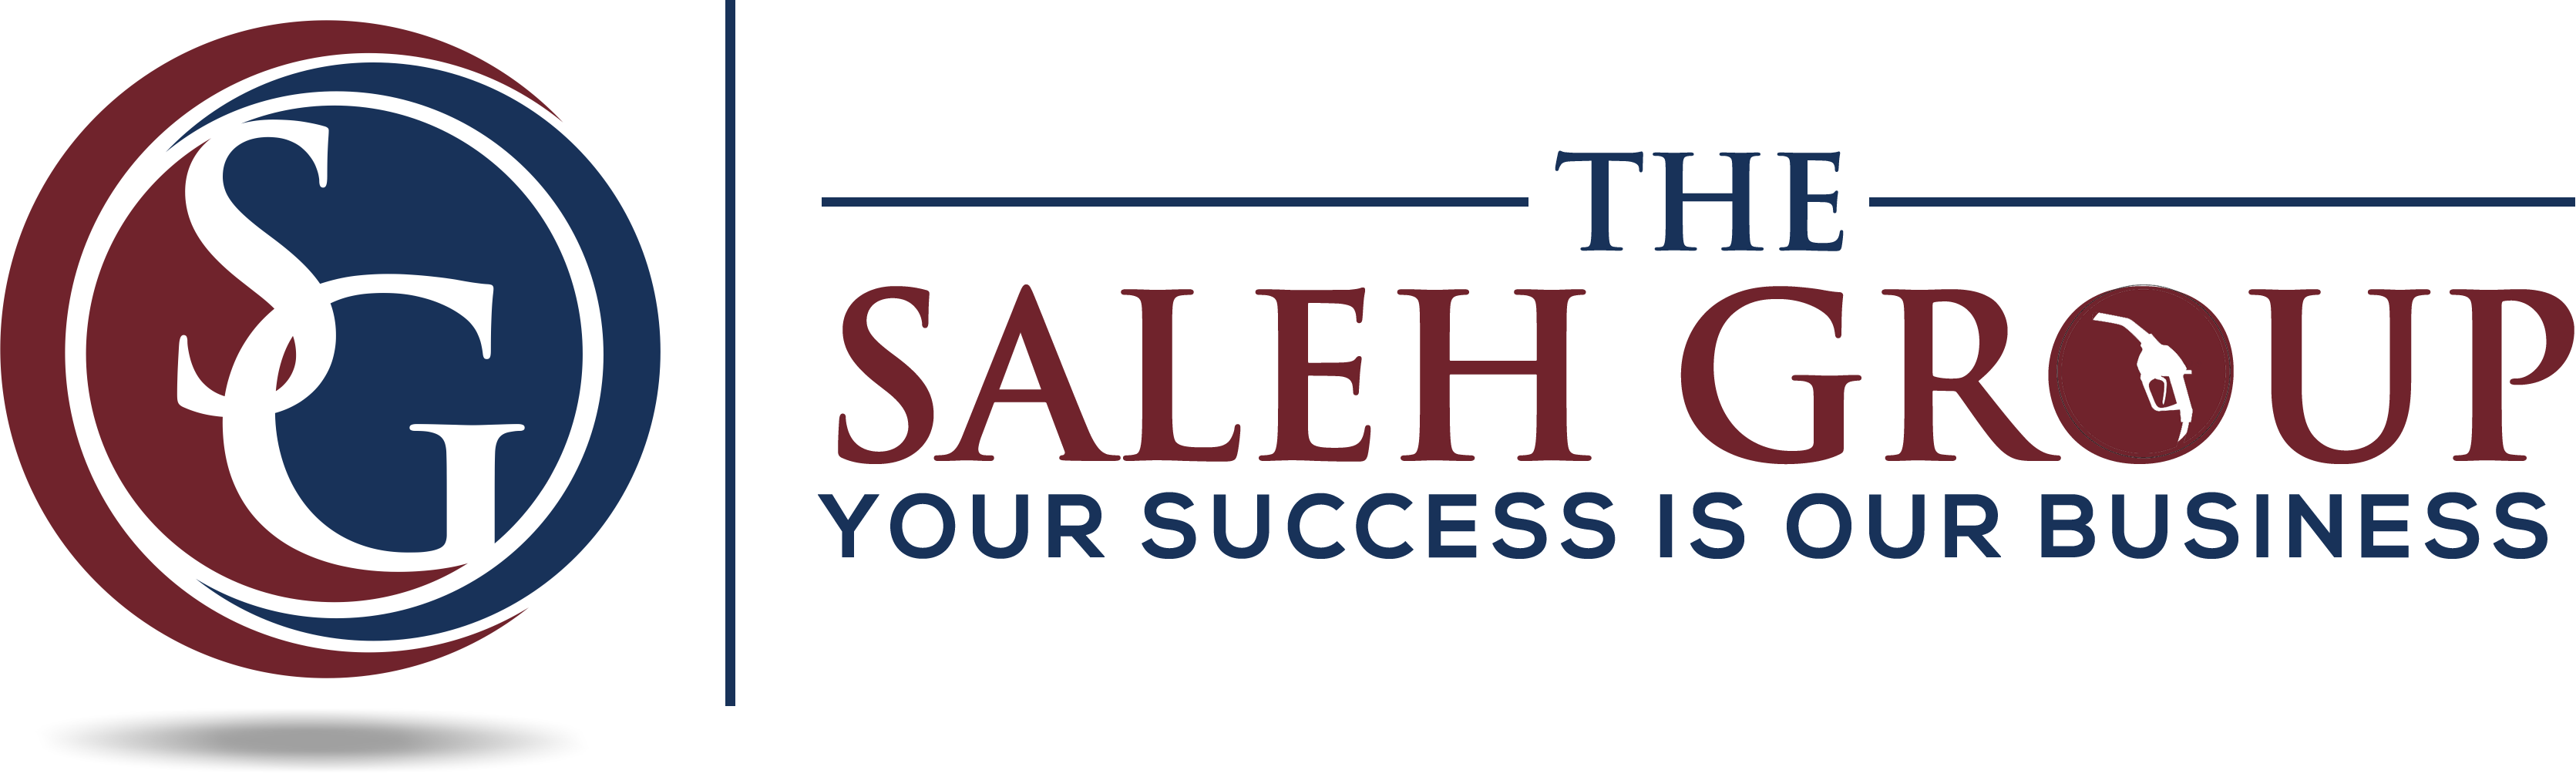 The Saleh Group